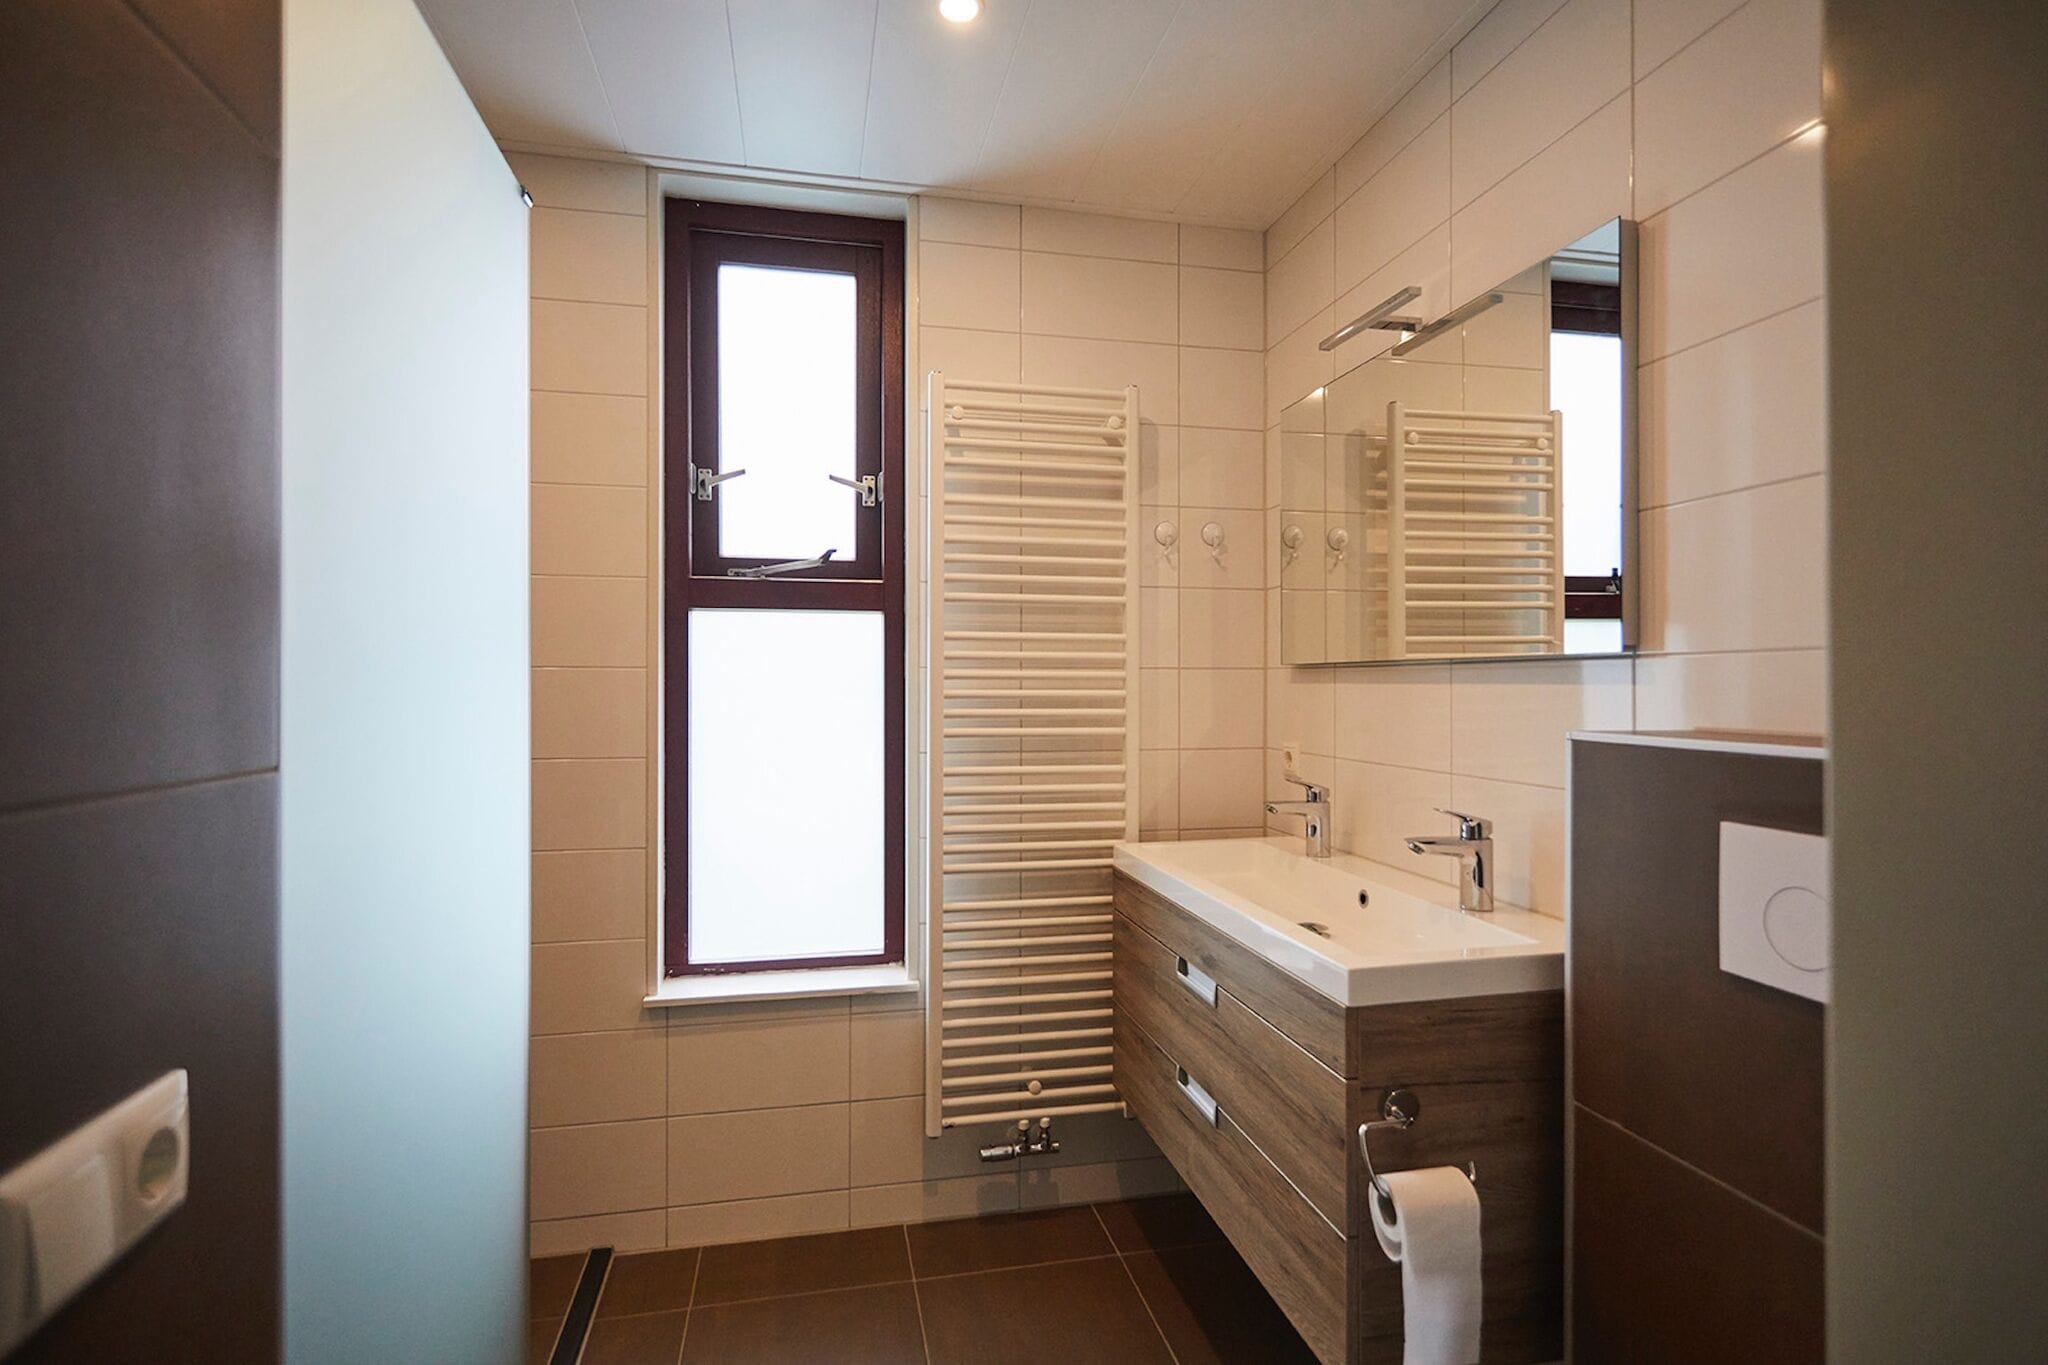 Knus vakantiehuis met twee badkamers, in Zeeland